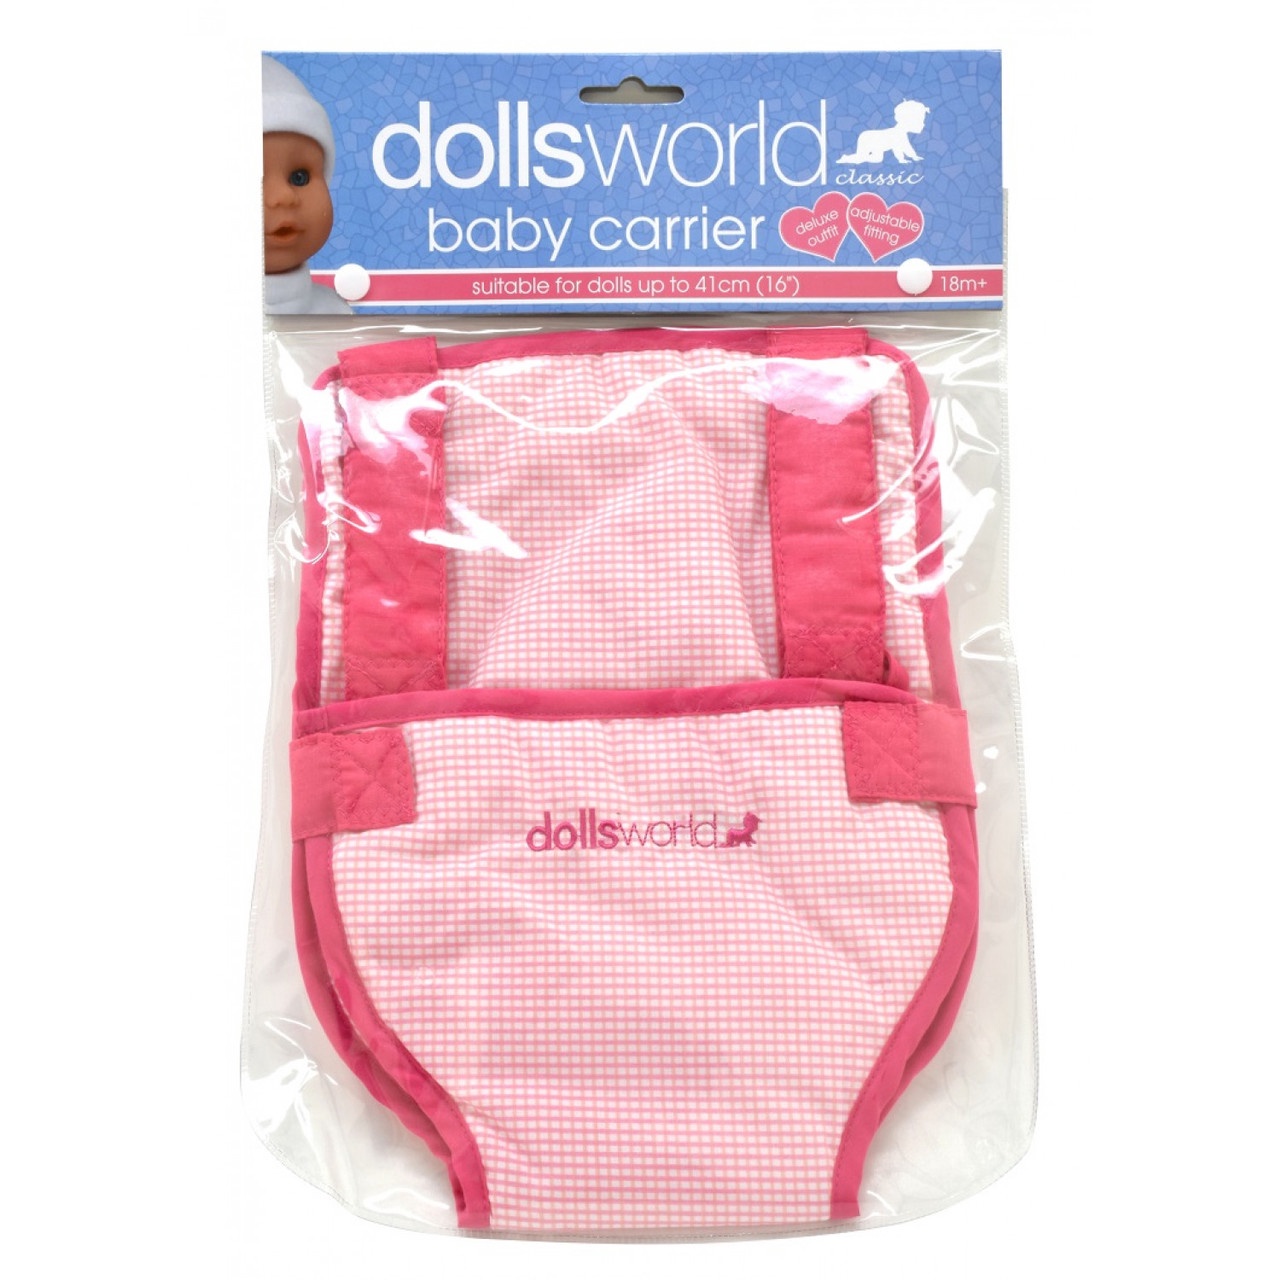 dolls world baby carrier